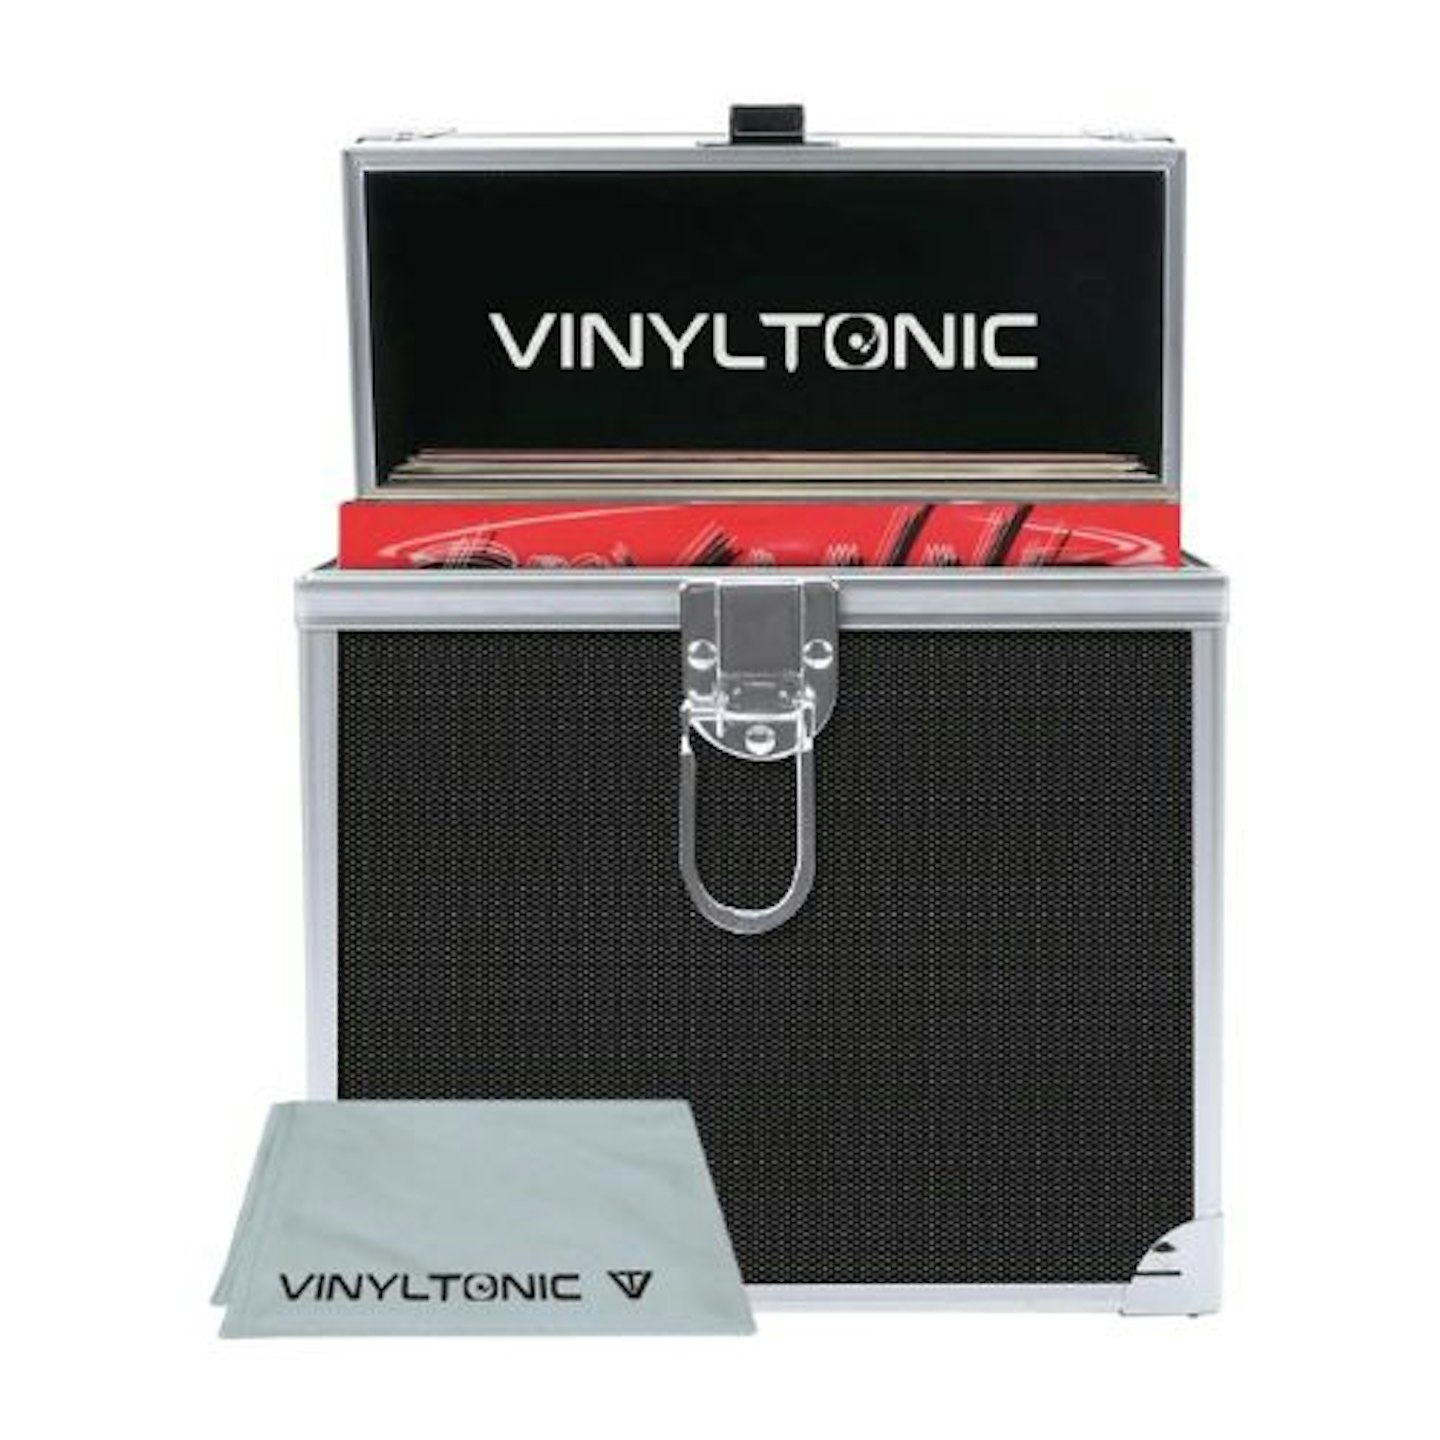 Vinyl Tonic 7" Black Vinyl Storage Case